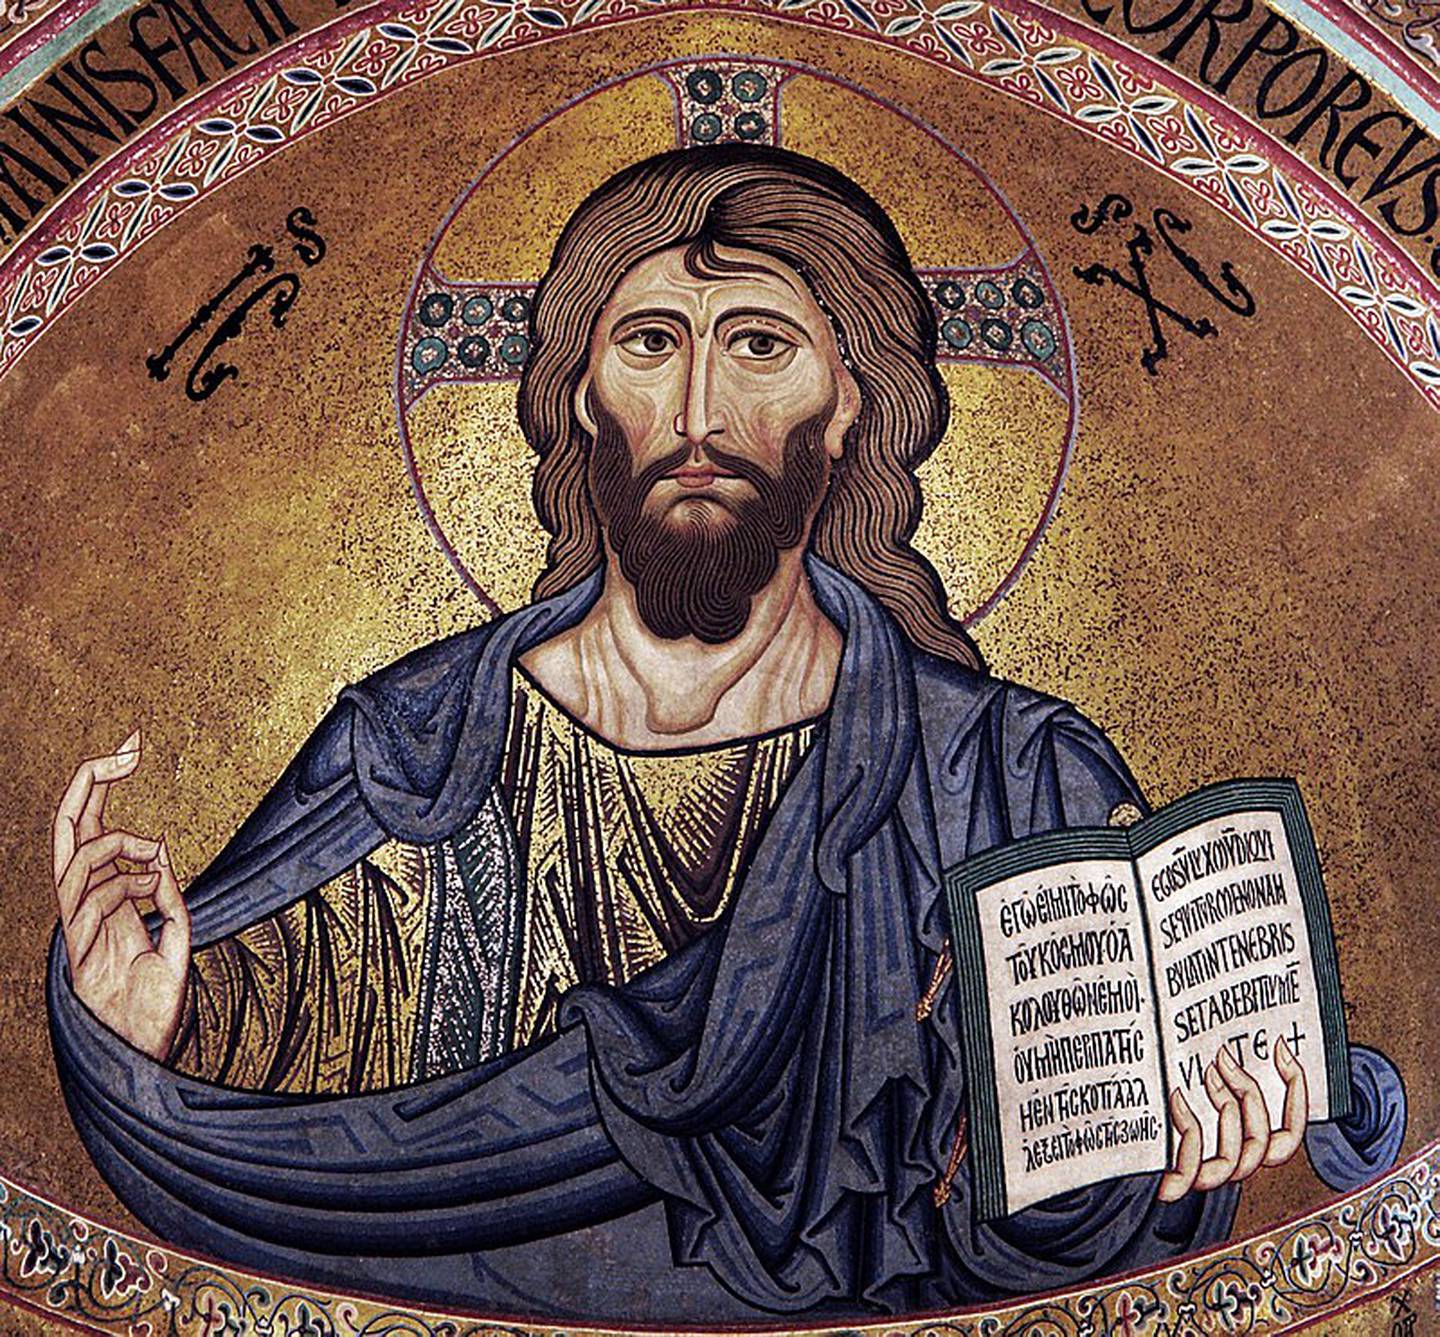 Kristus Pantokrator-mosaikk i bysantinsk stil, i Cefalù-katedralen på Sicilia, ca. 1130